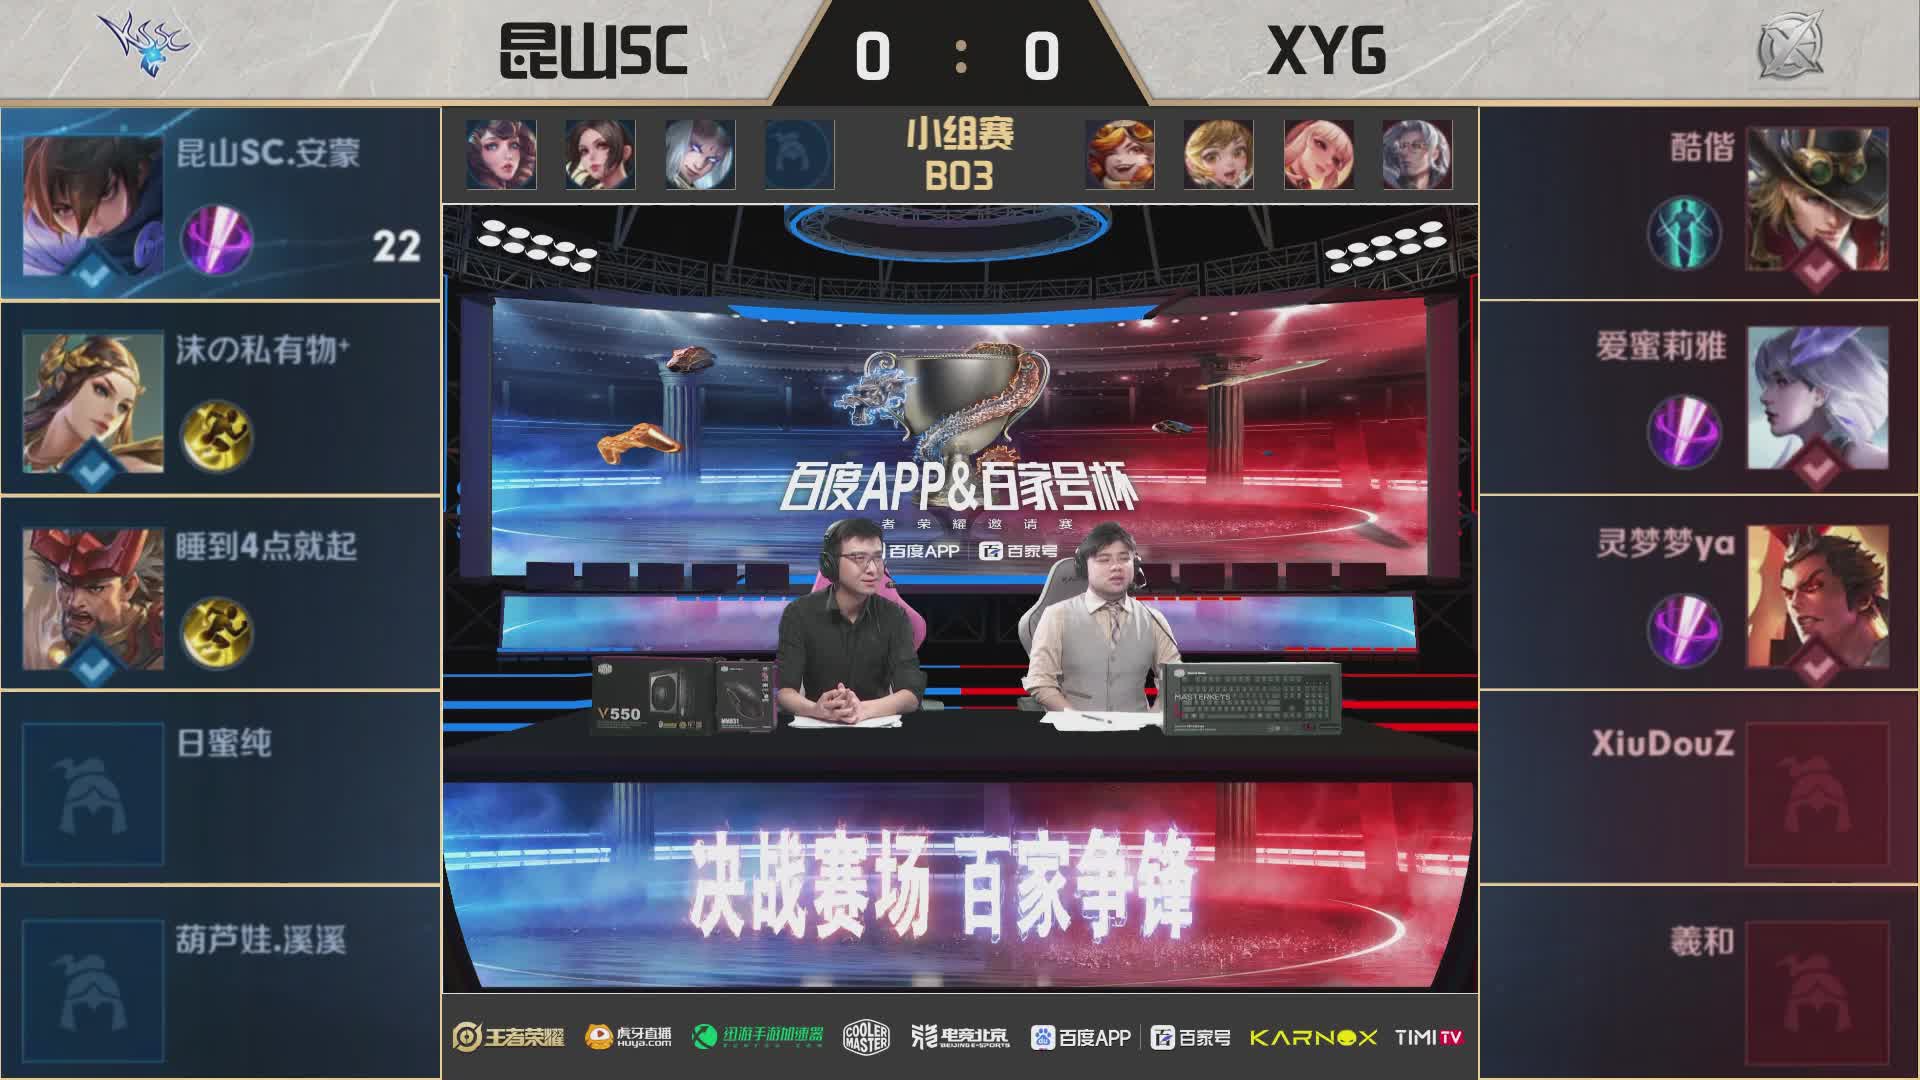 XYG vs 昆山SC 百度杯B组小组赛